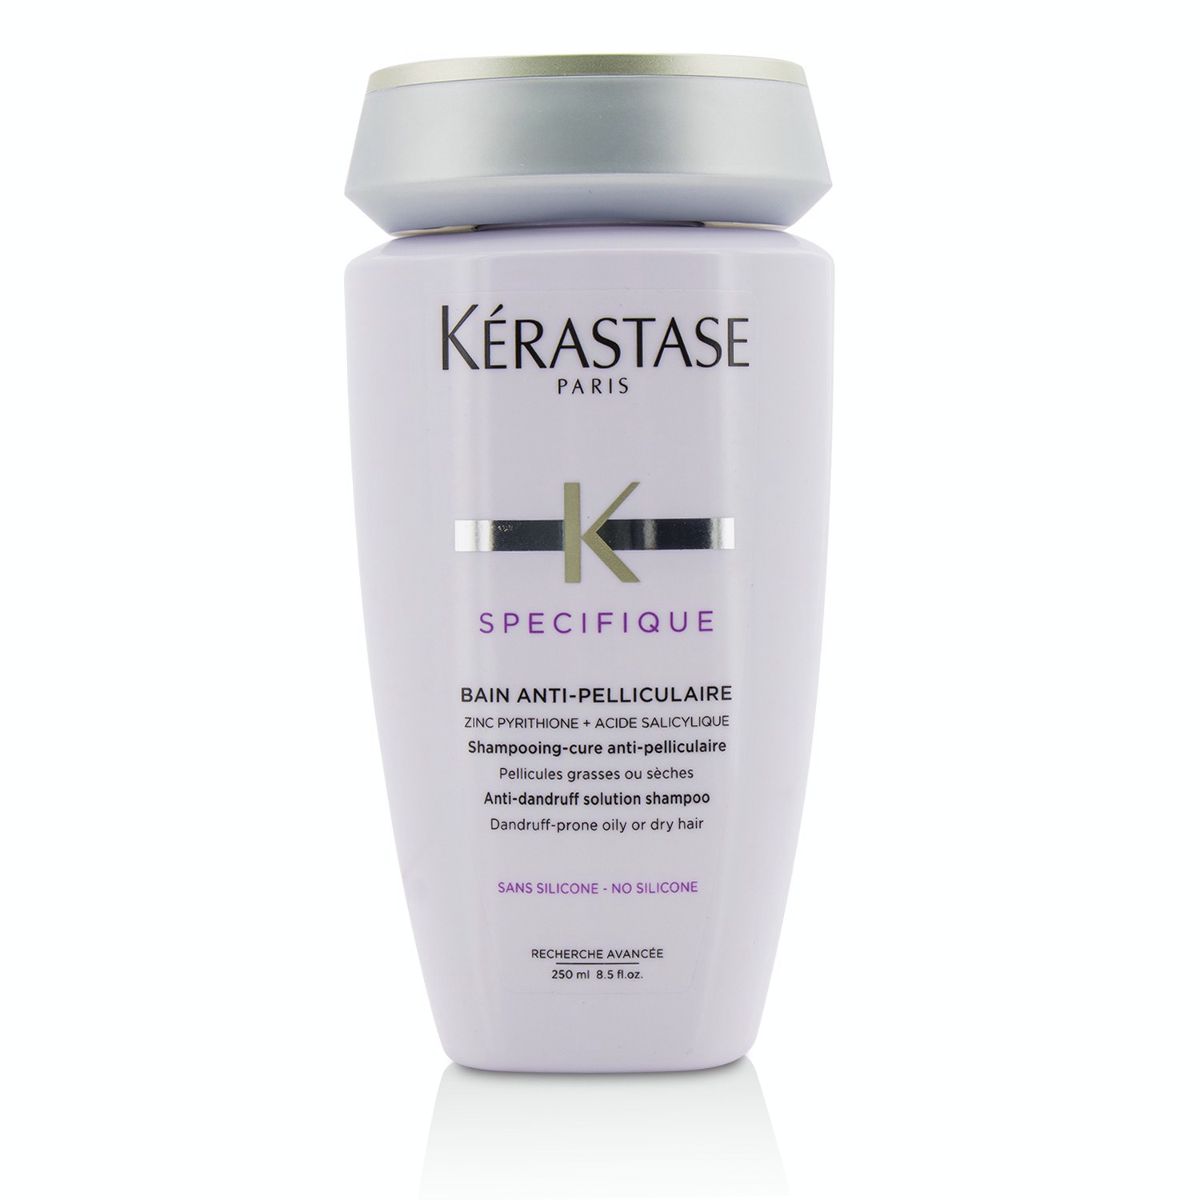 Specifique Bain Anti-Pelliculaire Anti-Dandruff Solution Shampoo (Dandruff-Prone Oily or Dry Hair) Kerastase Image